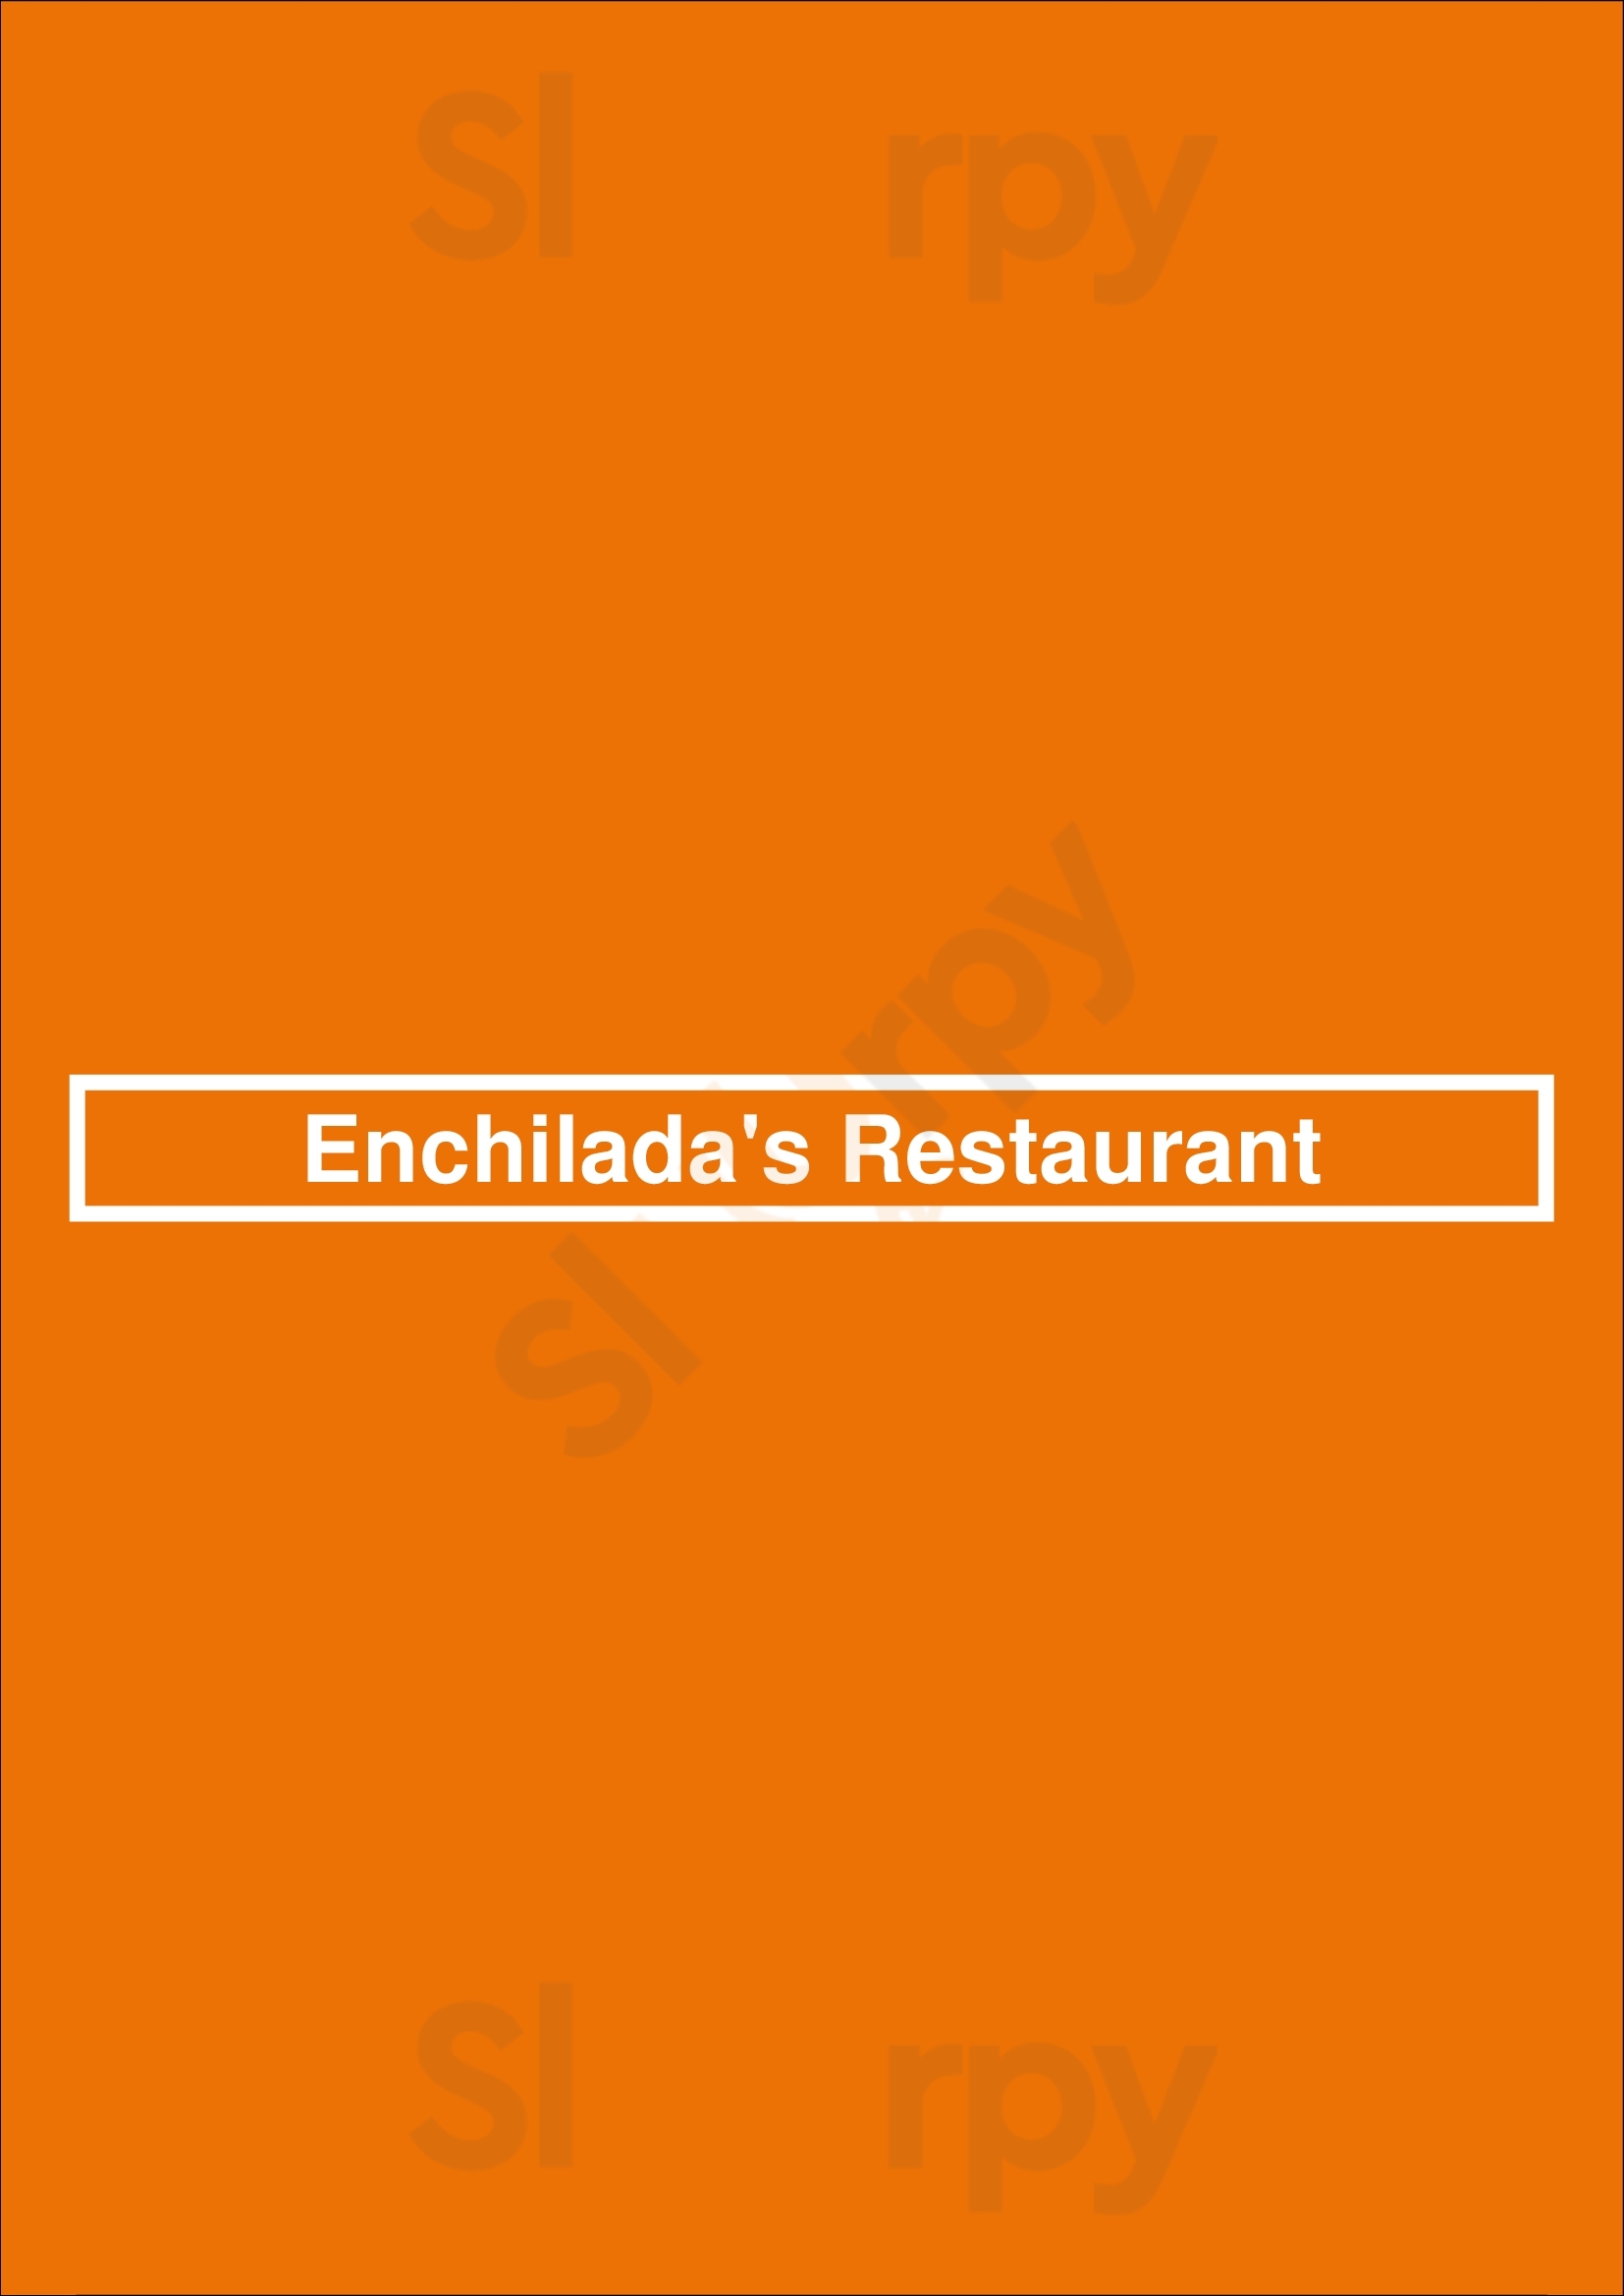 Enchilada's Restaurant Dallas Menu - 1